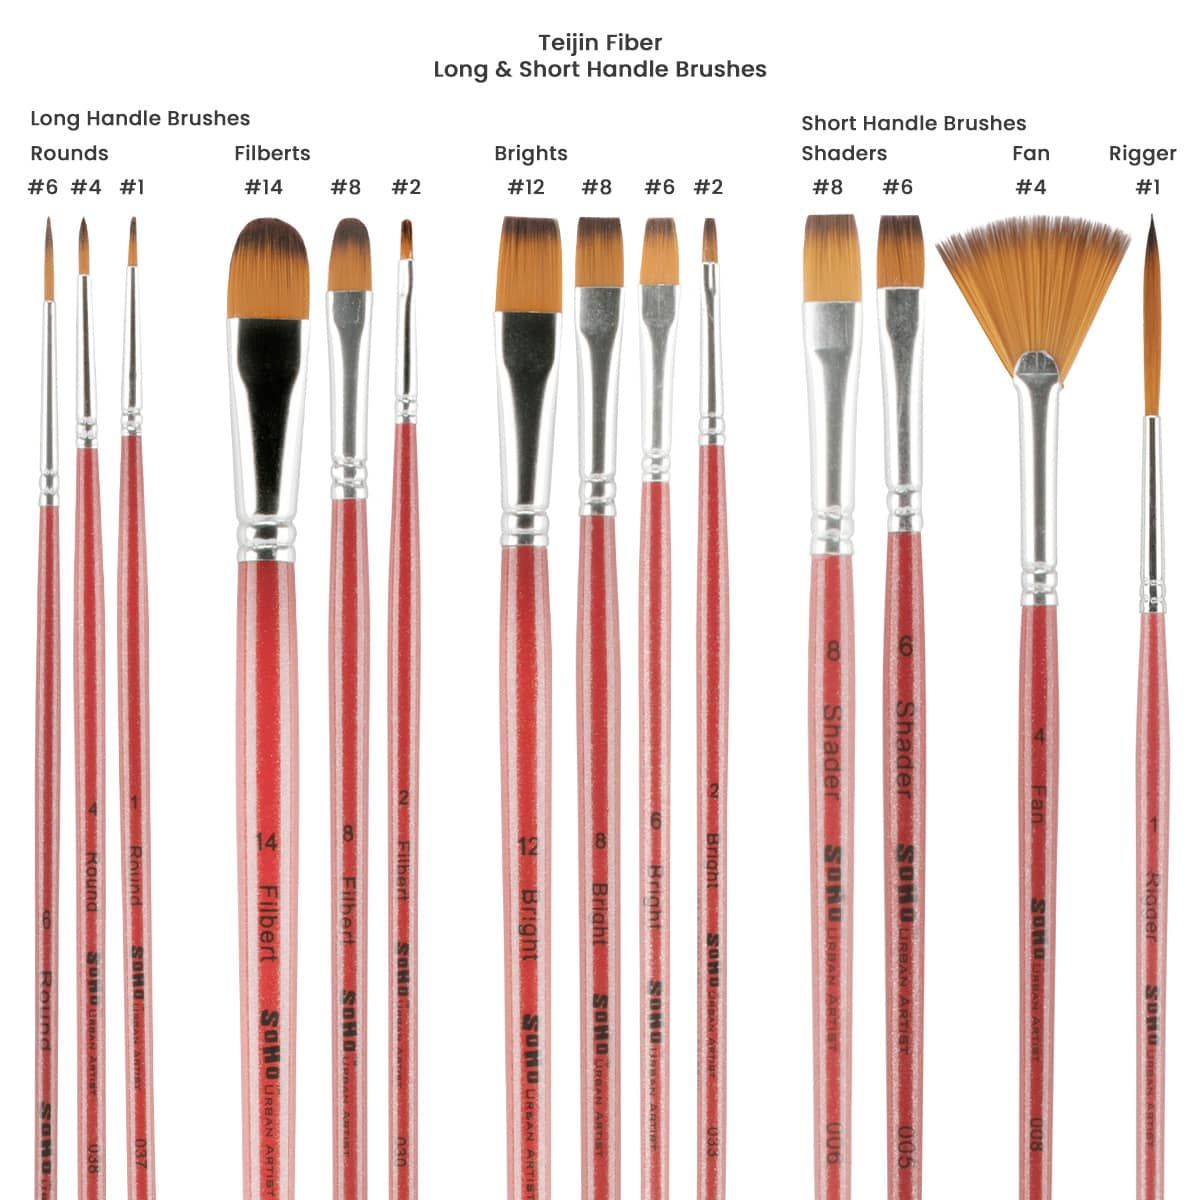 Teijin Fiber Long & Short Handle Brush Line